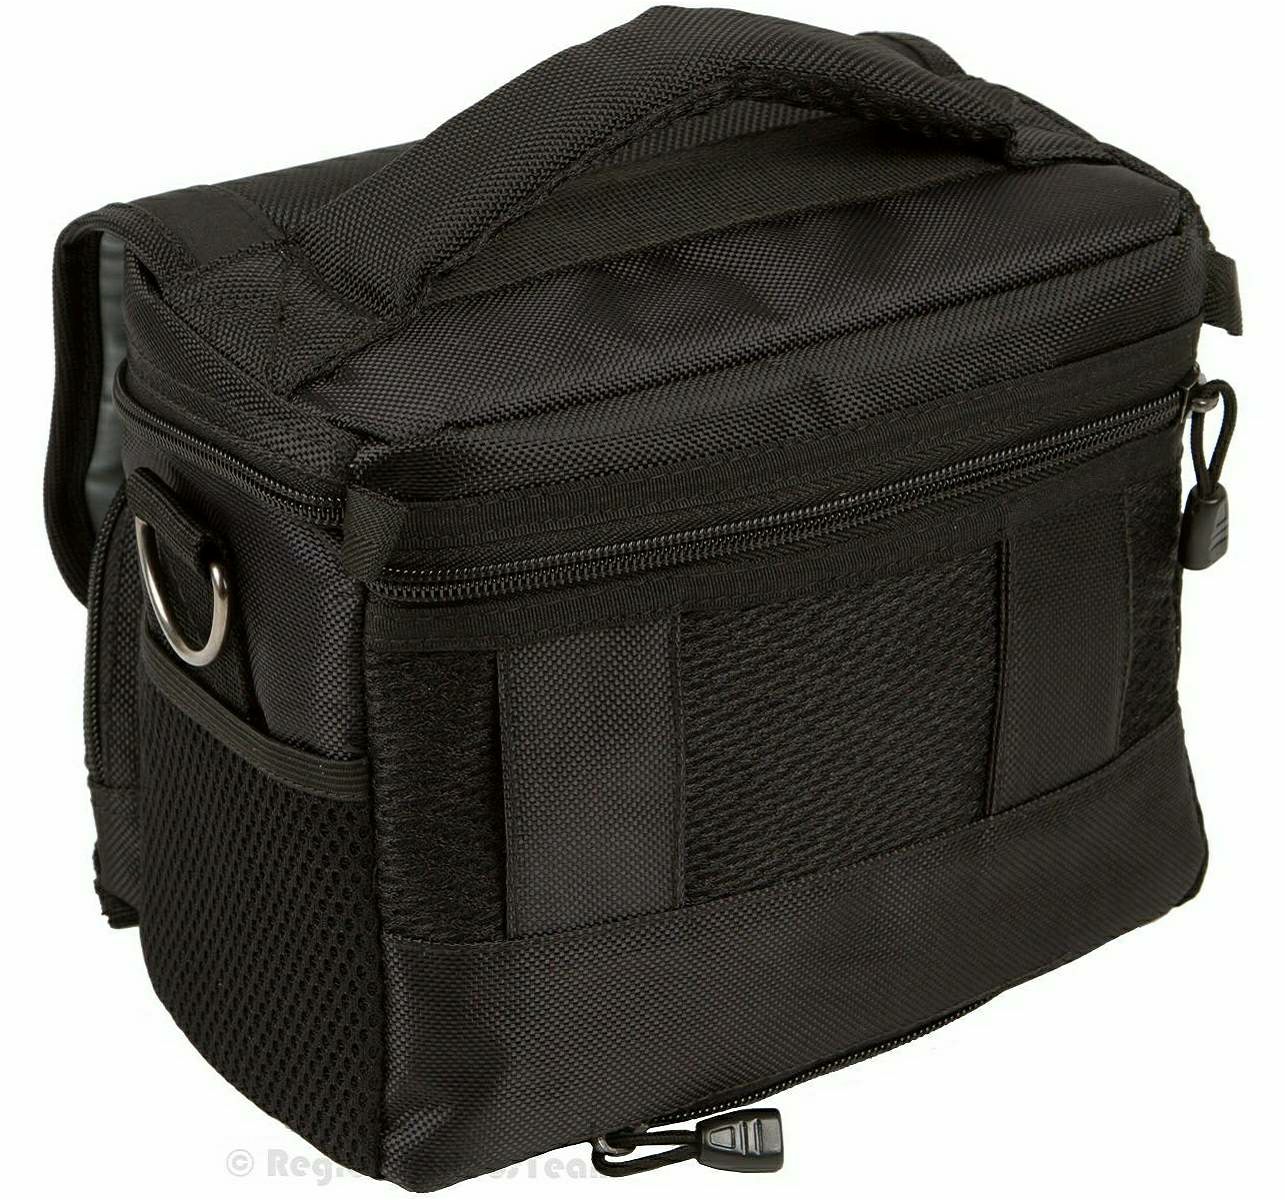 Bilora B-Star 40 (2540) Compact Bag torba za DSLR, mirrorless ili kompaktni fotoaparat